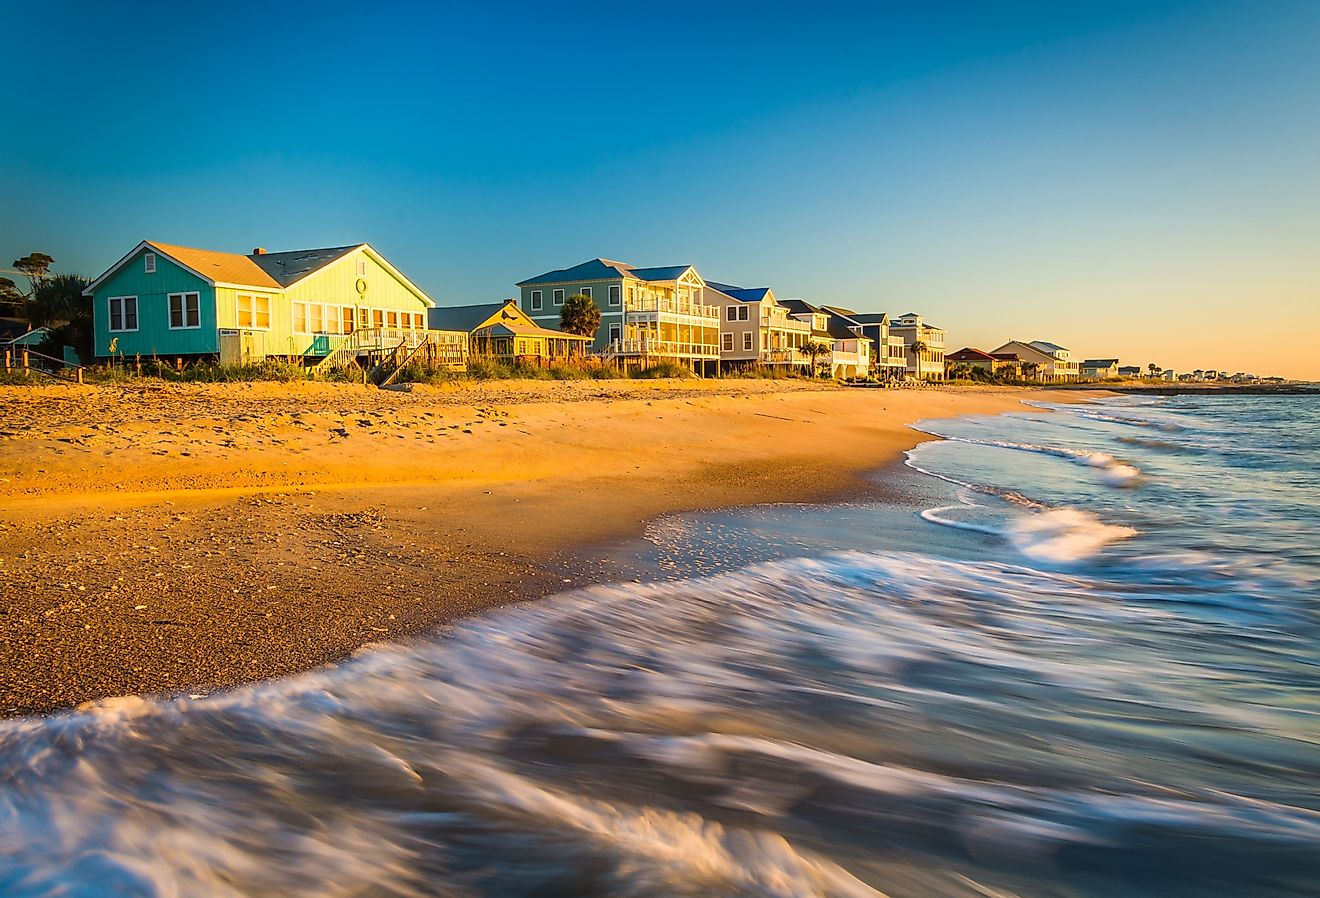 Waves in the Atlantic Ocean and morning light on beachfront homes at Edisto Beach, South Carolina.